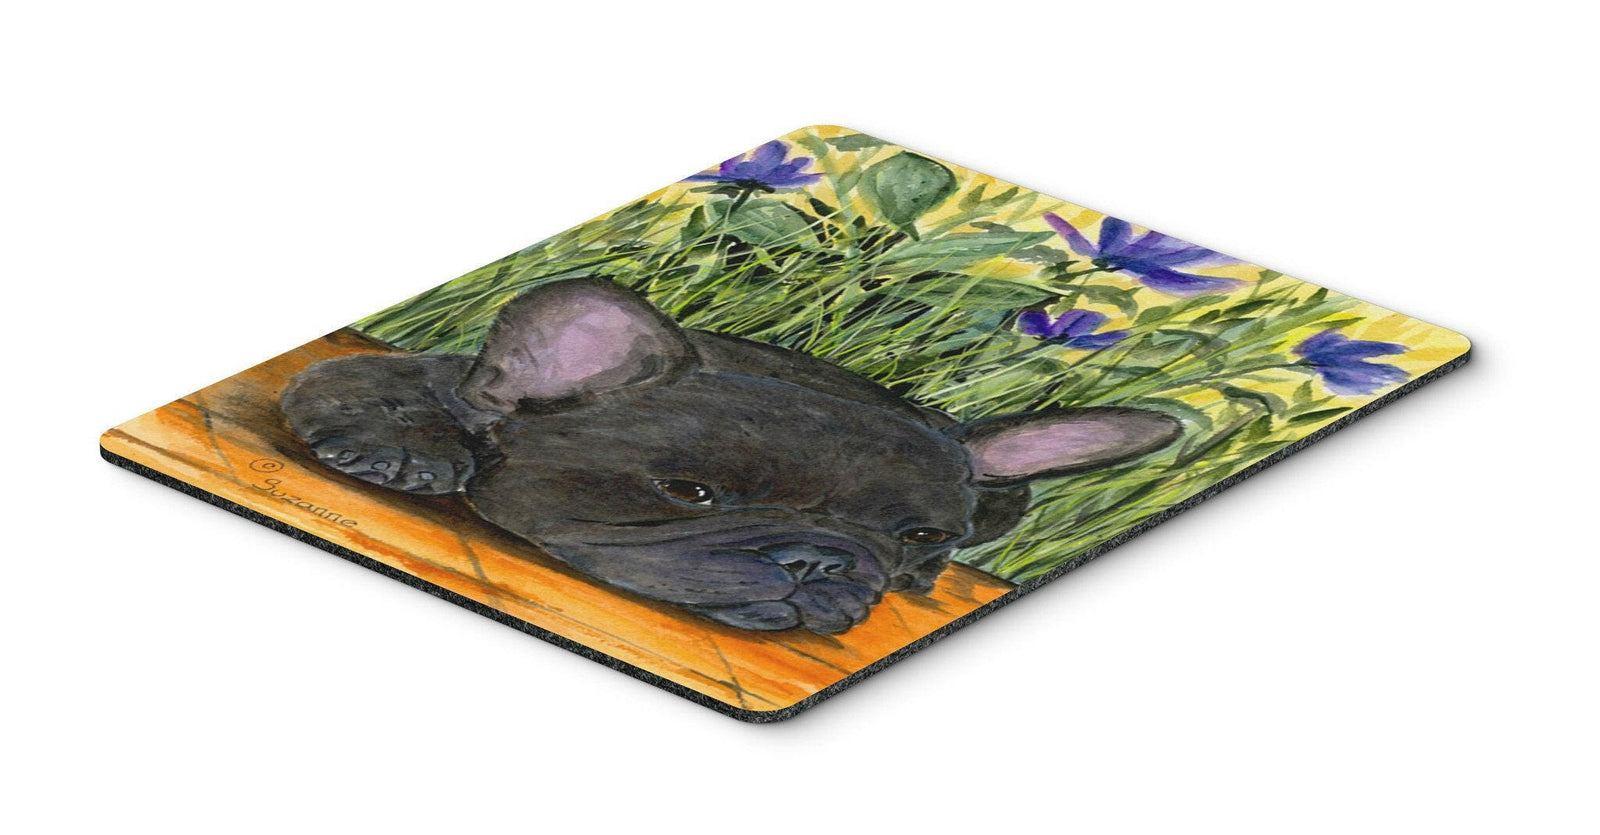 French Bulldog Mouse Pad / Hot Pad / Trivet by Caroline's Treasures